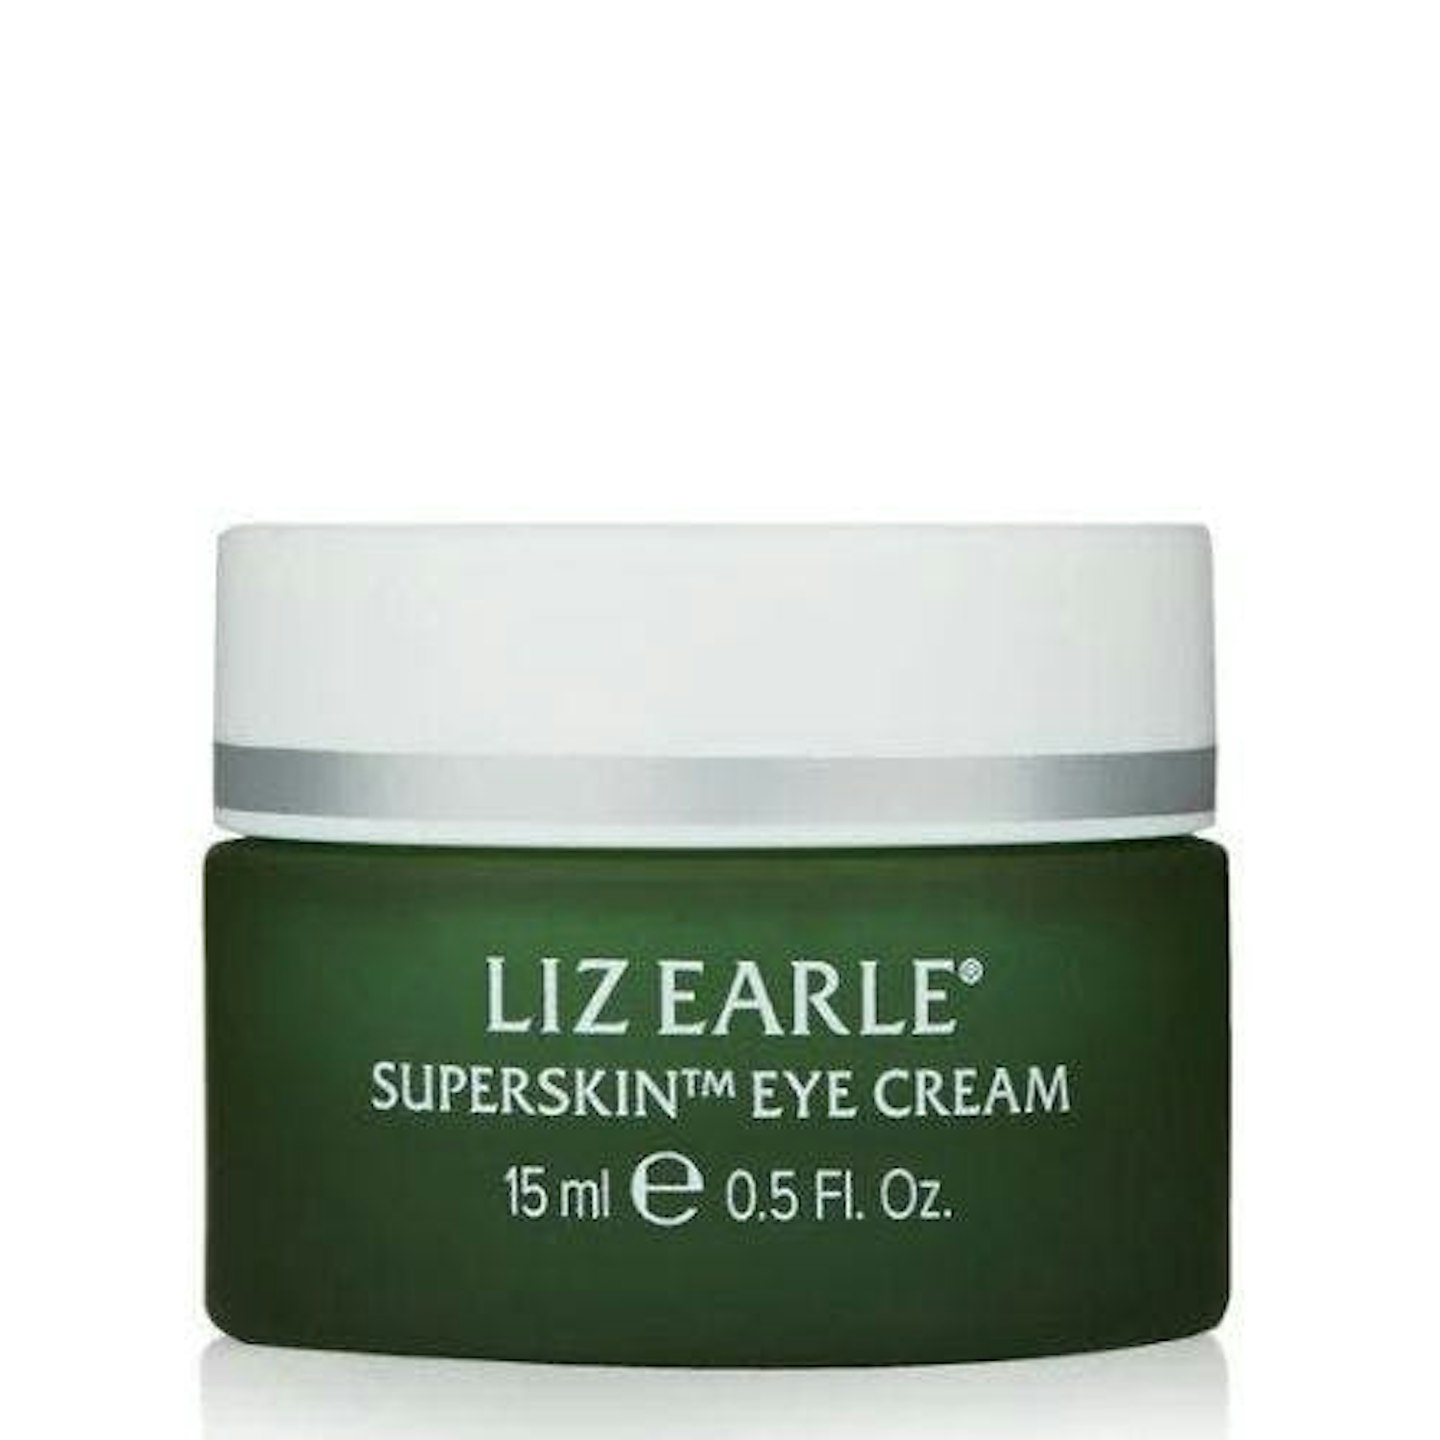 Liz Earle Superskin™ Eye Cream, 15ml